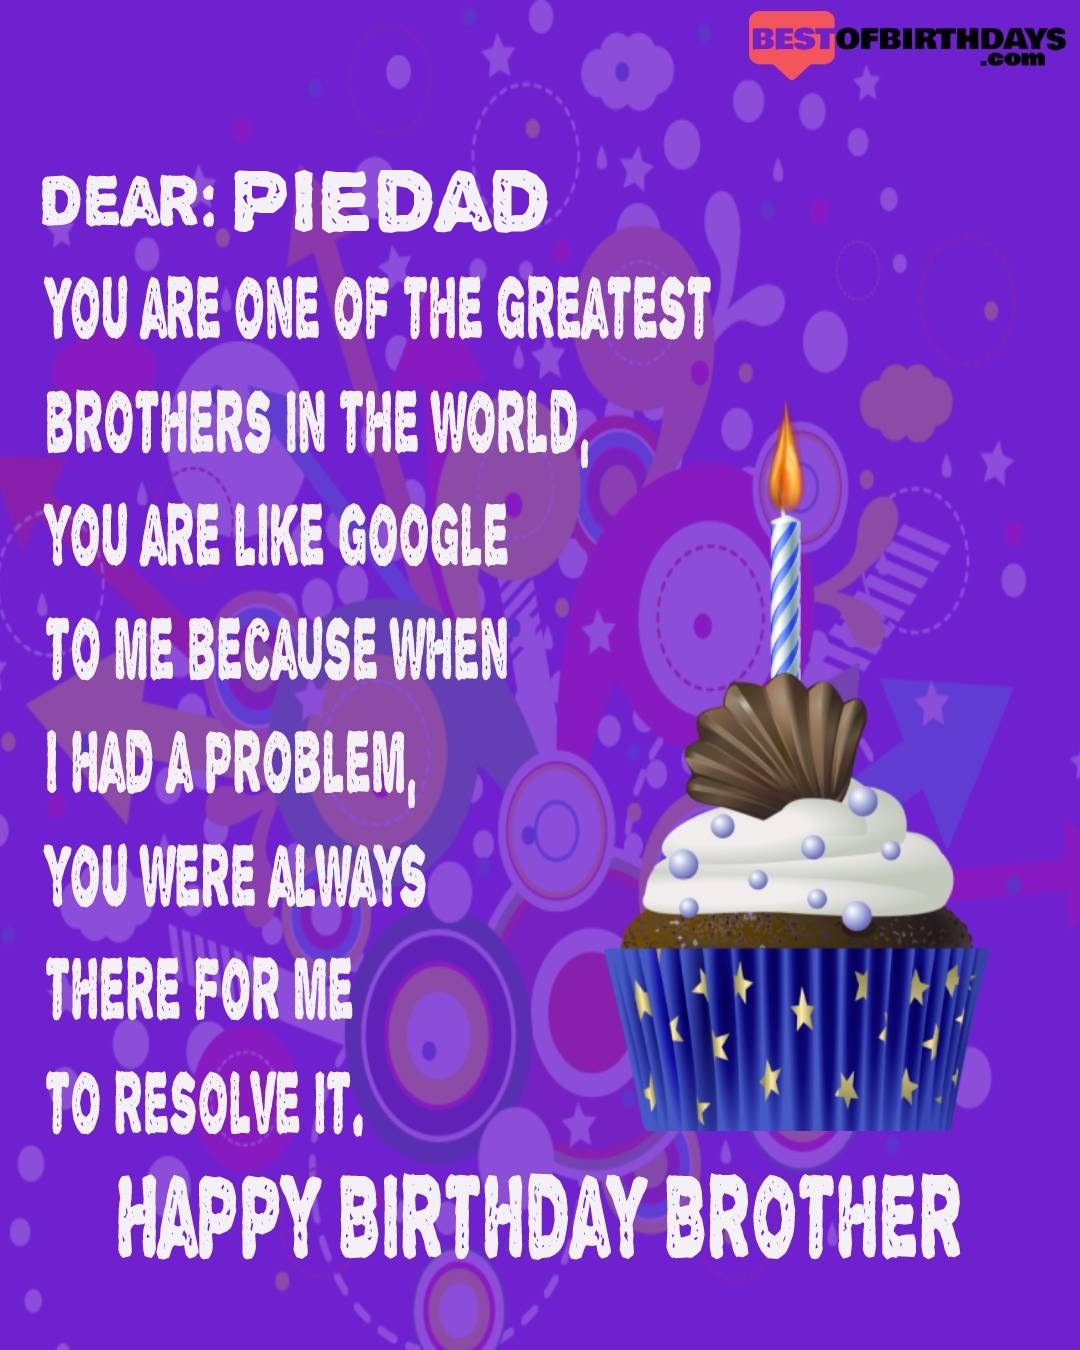 Happy birthday piedad bhai brother bro